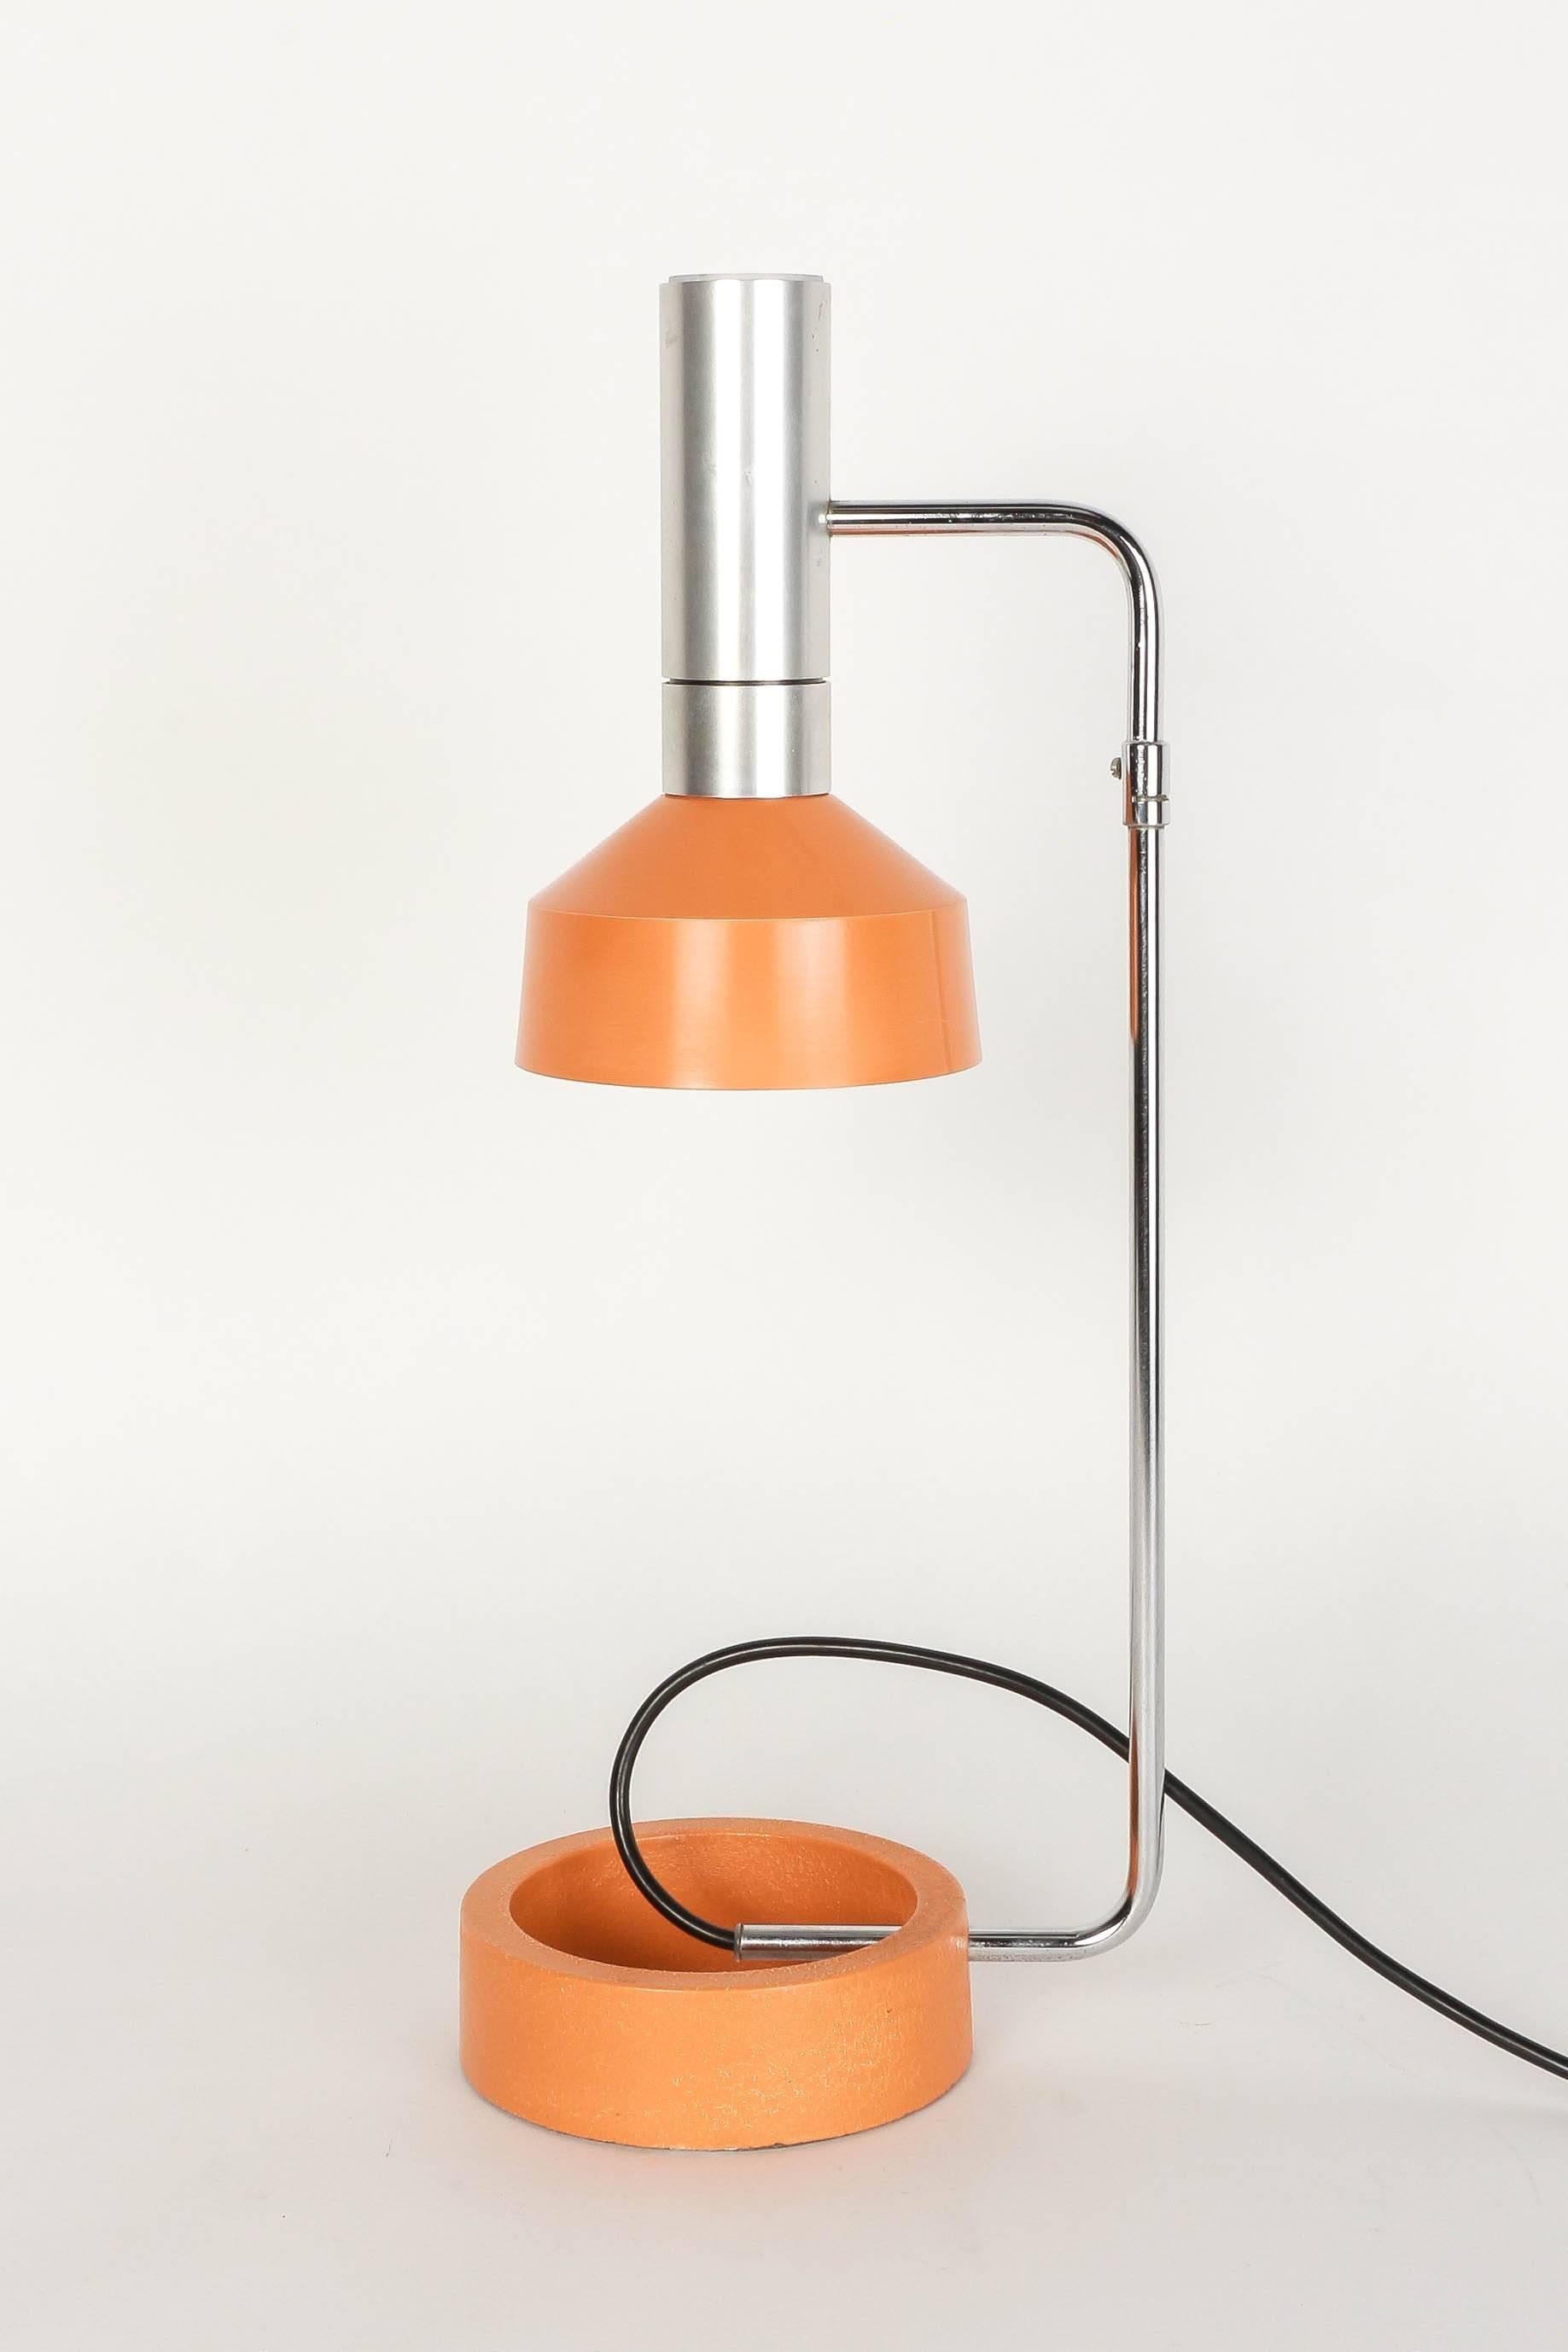 Swiss desk lamp, model 